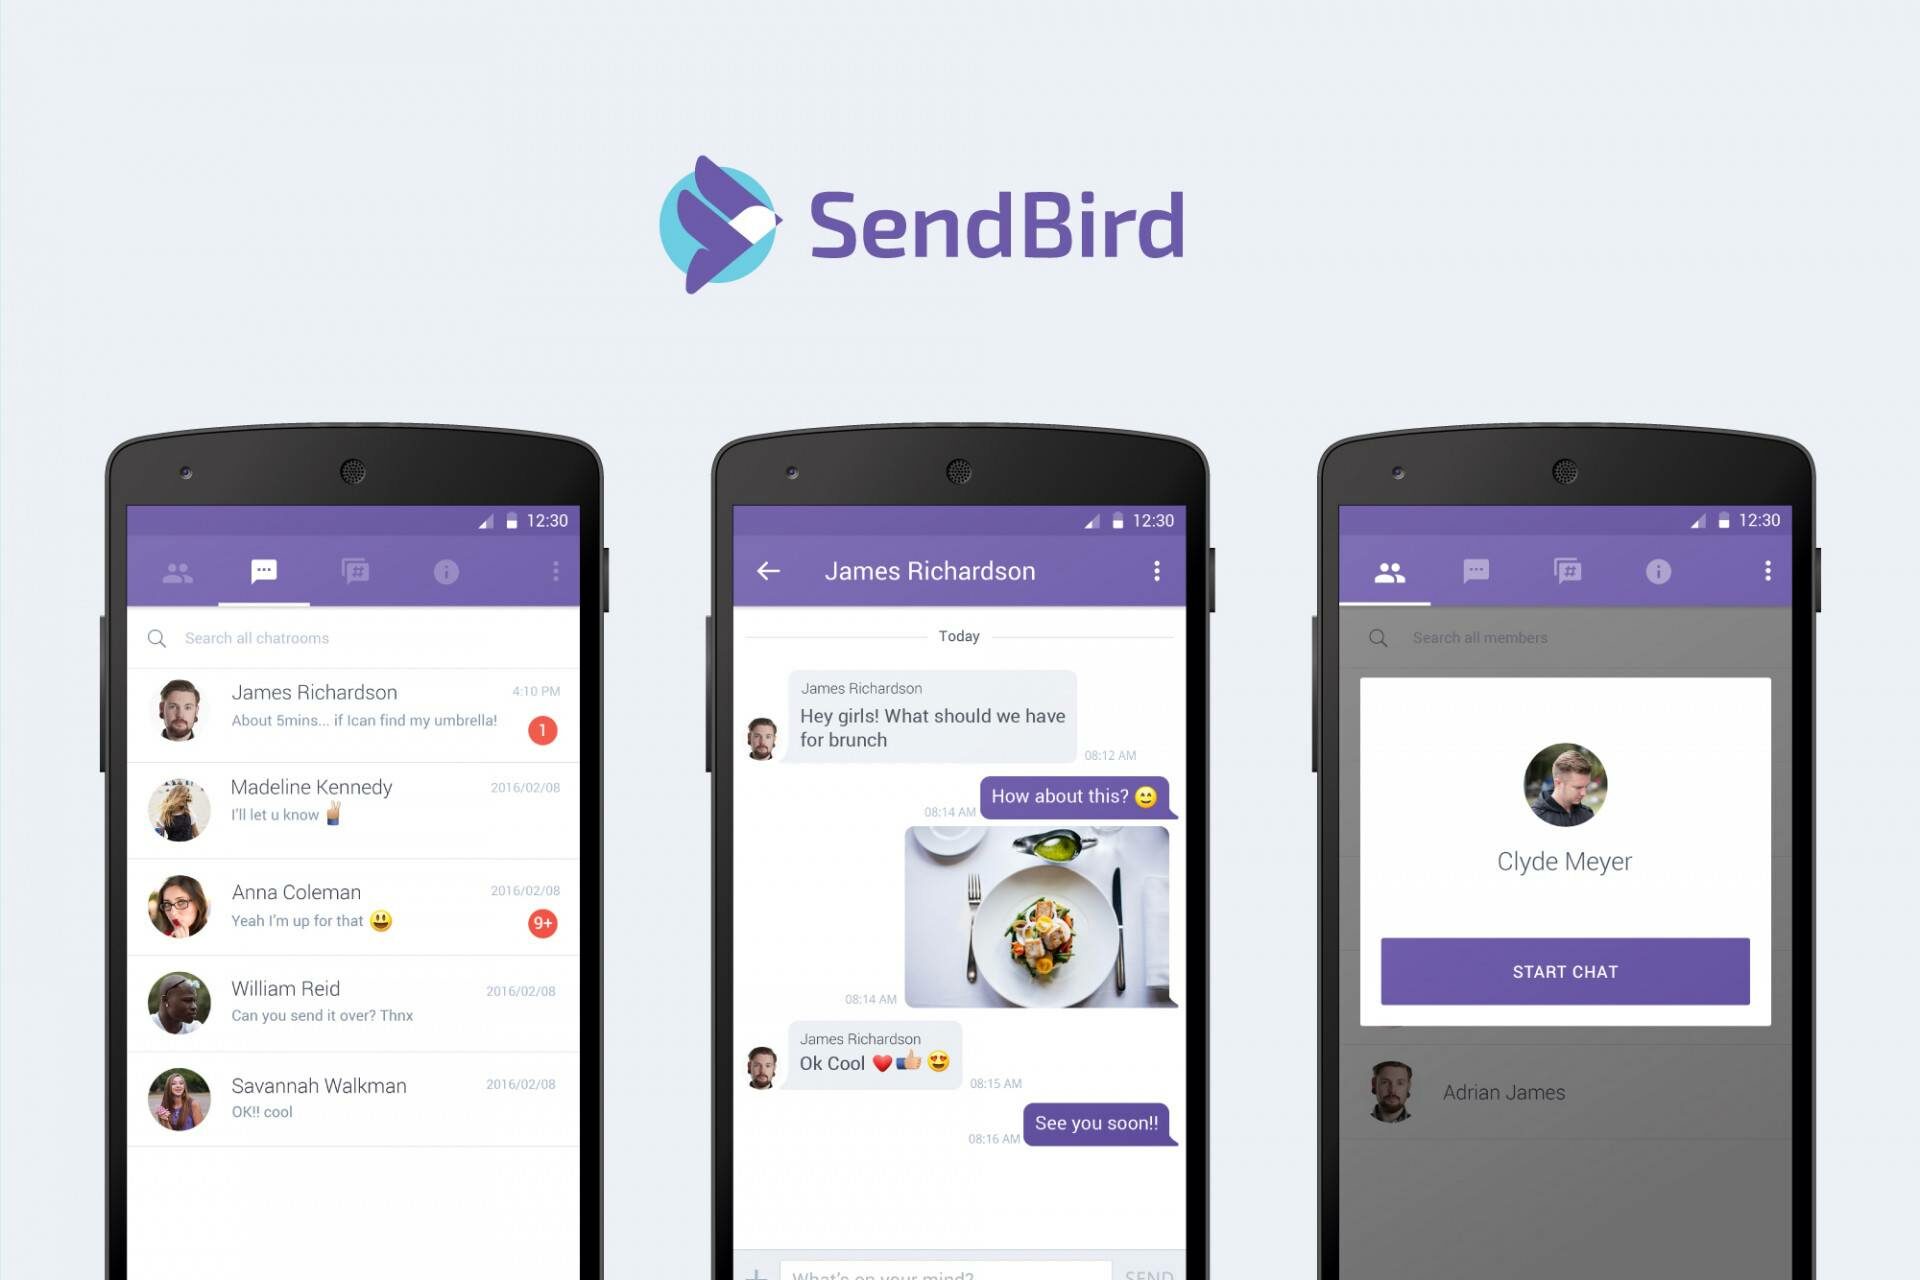 Sendbird chat